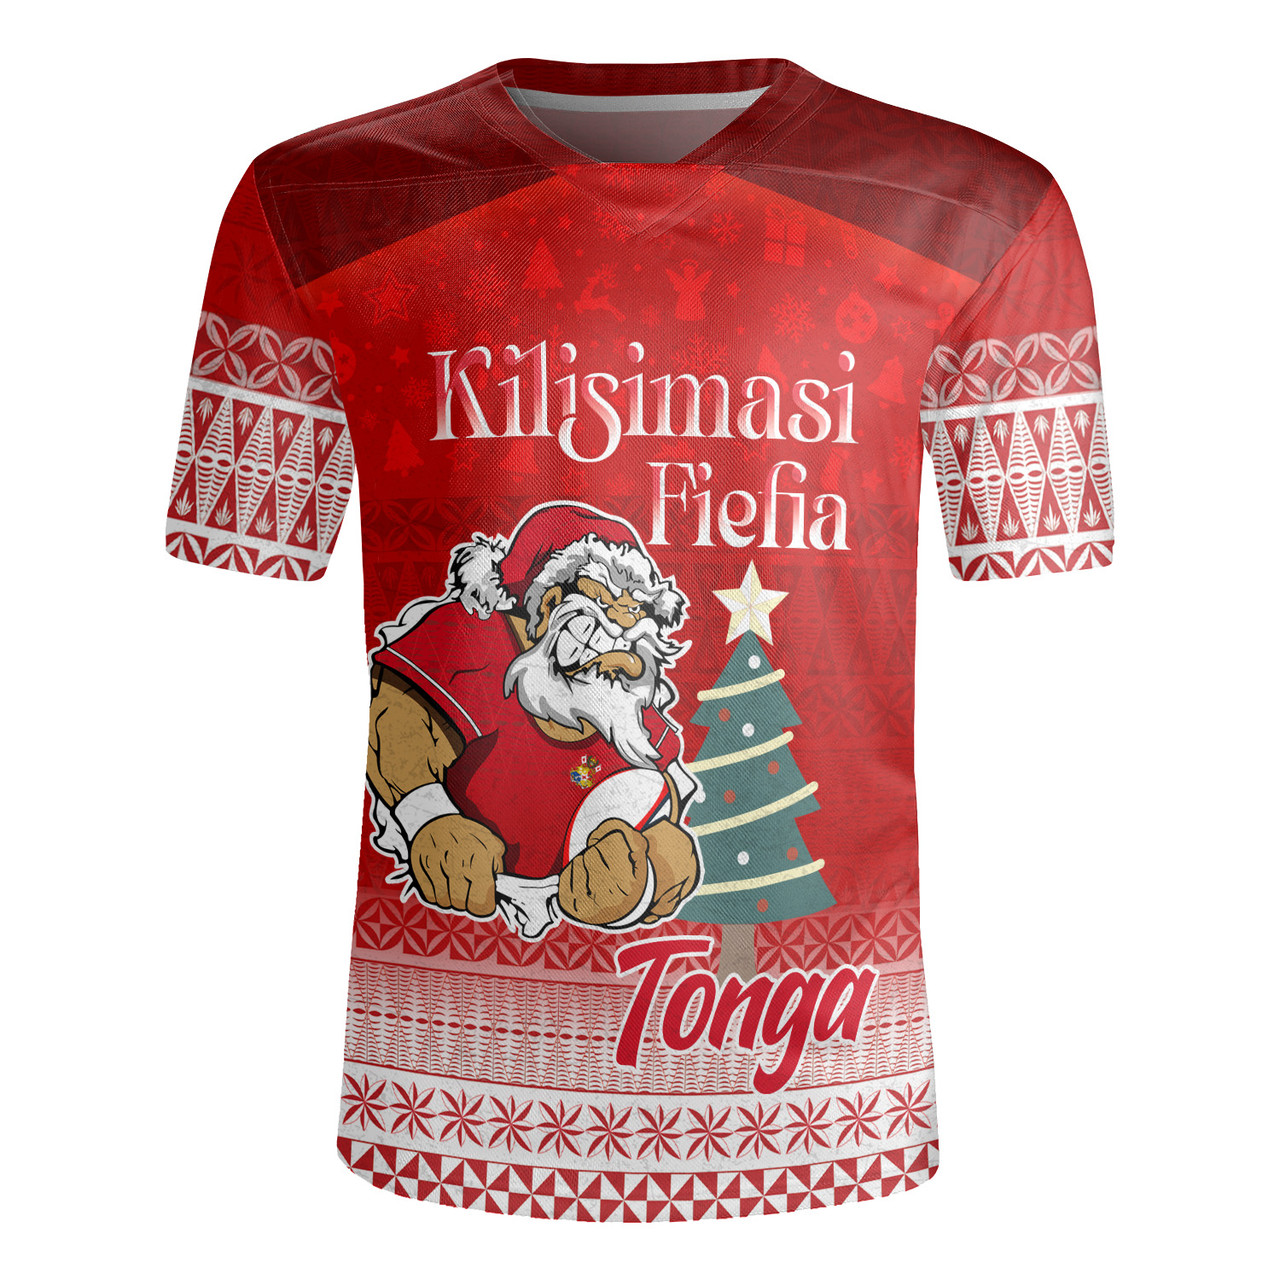 Tonga Rugby Jersey Kilisimasi Fiefia Rugby Santa Style